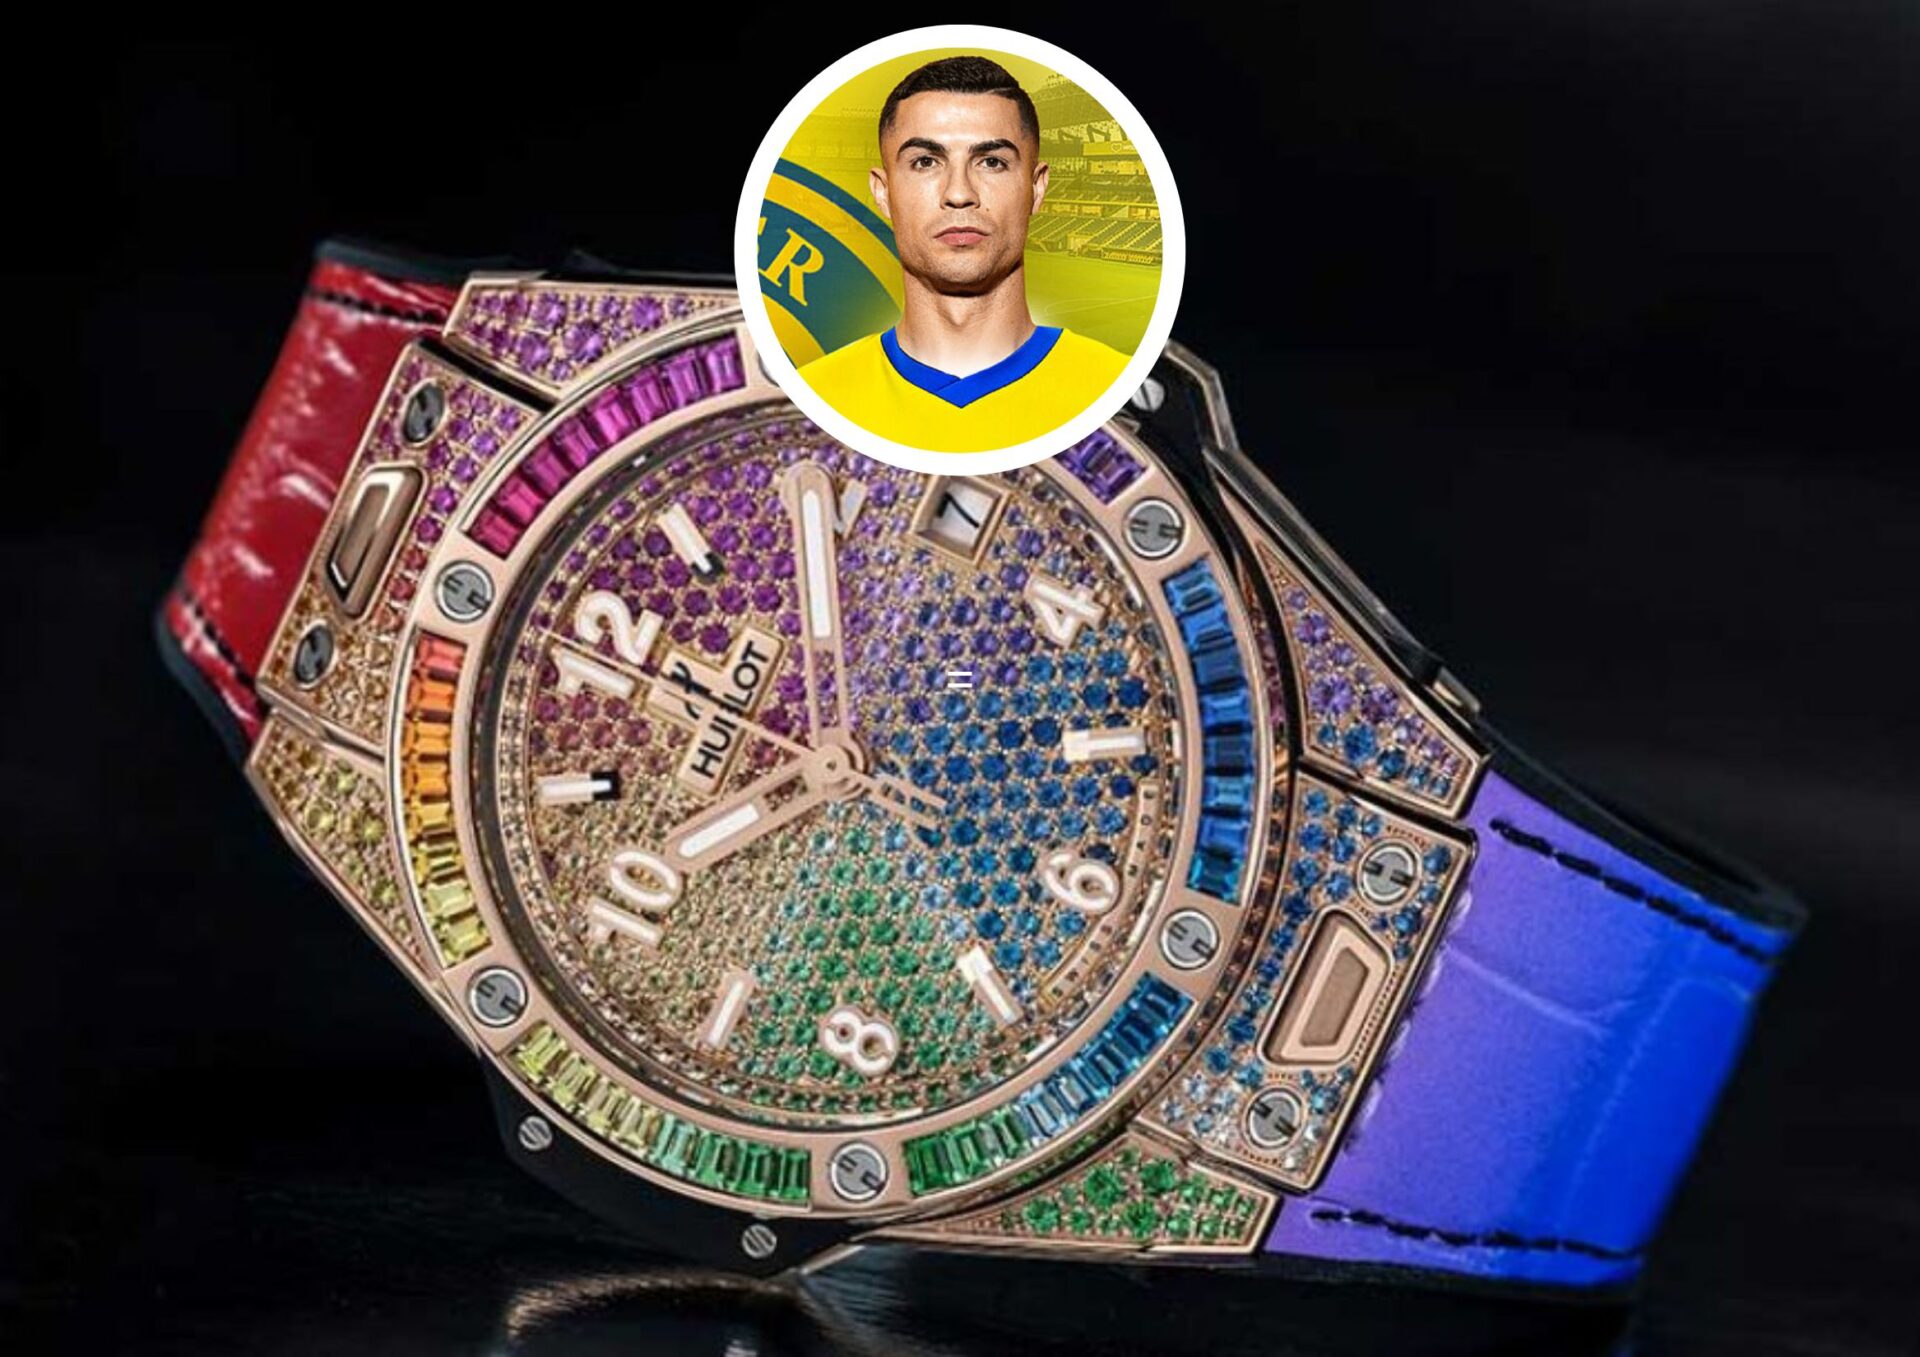 Cristian Ronaldo's Hublot Gold Rainbow Watch